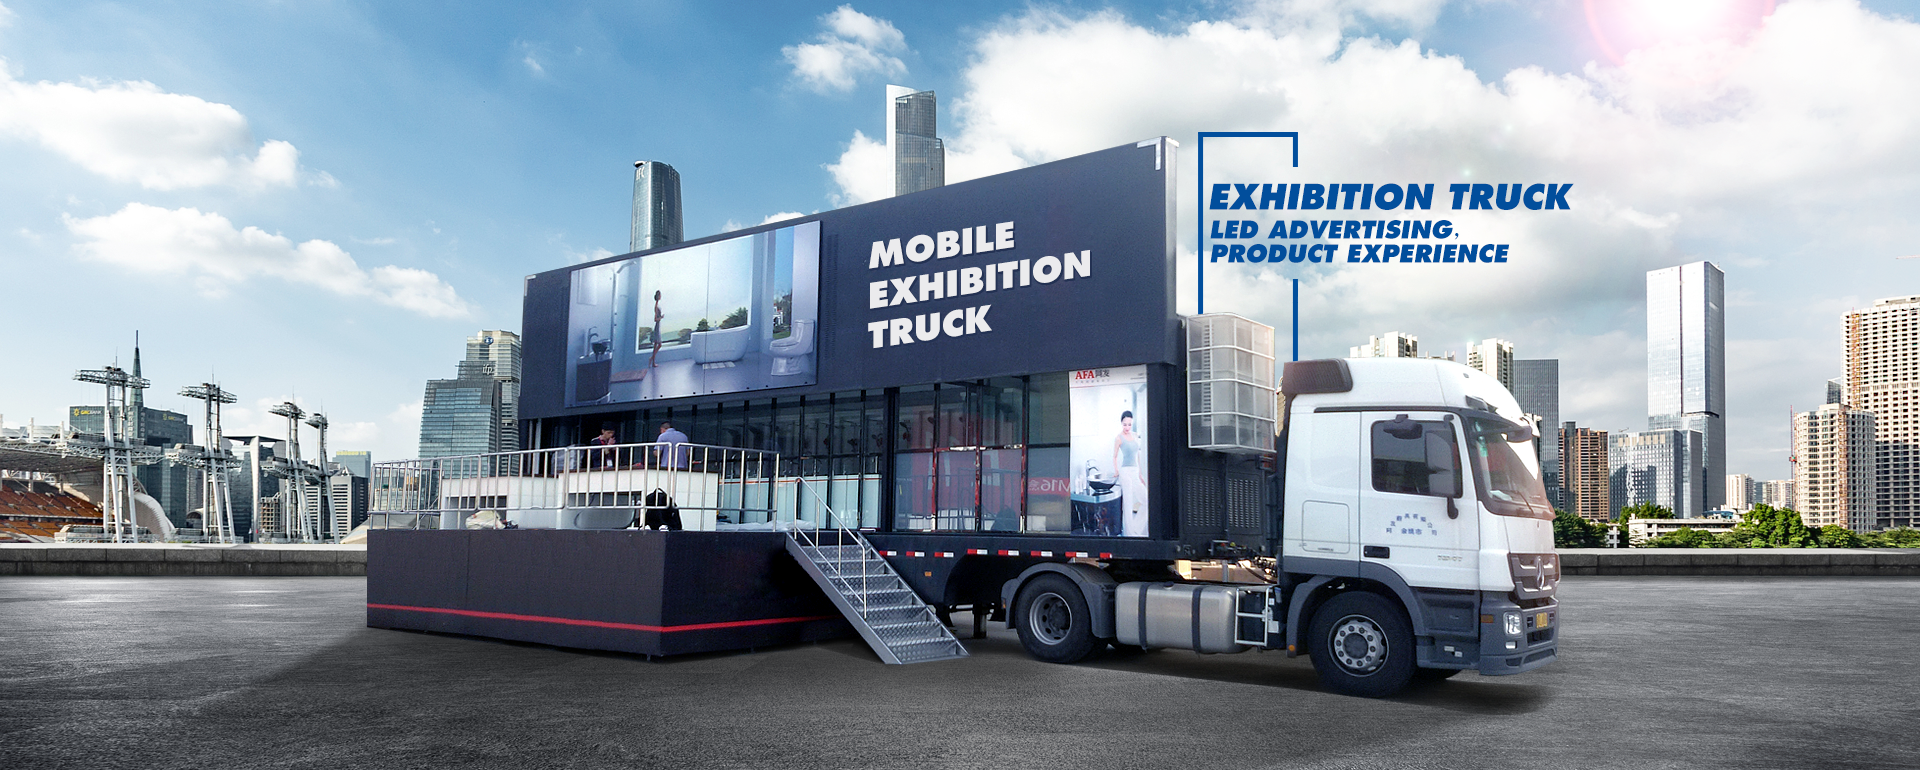 Mobile Exhibition Truck